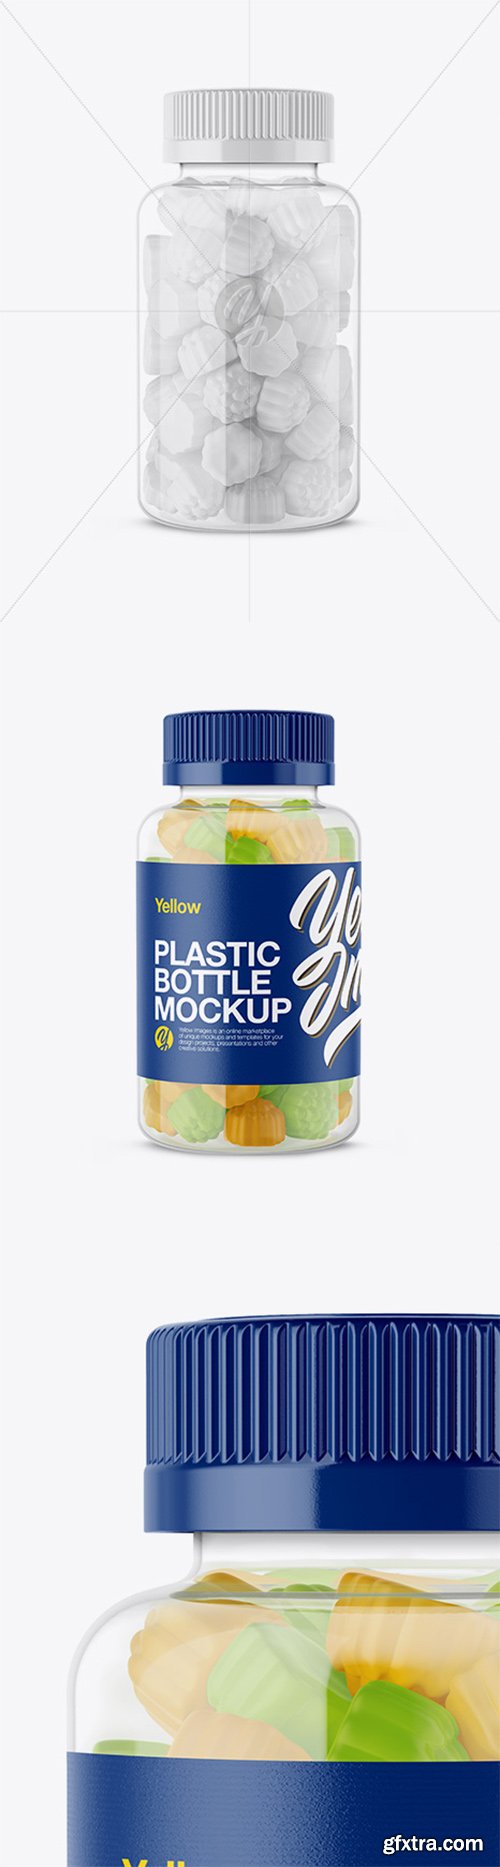 Plastic Bottle with Gummies Mockup 24182